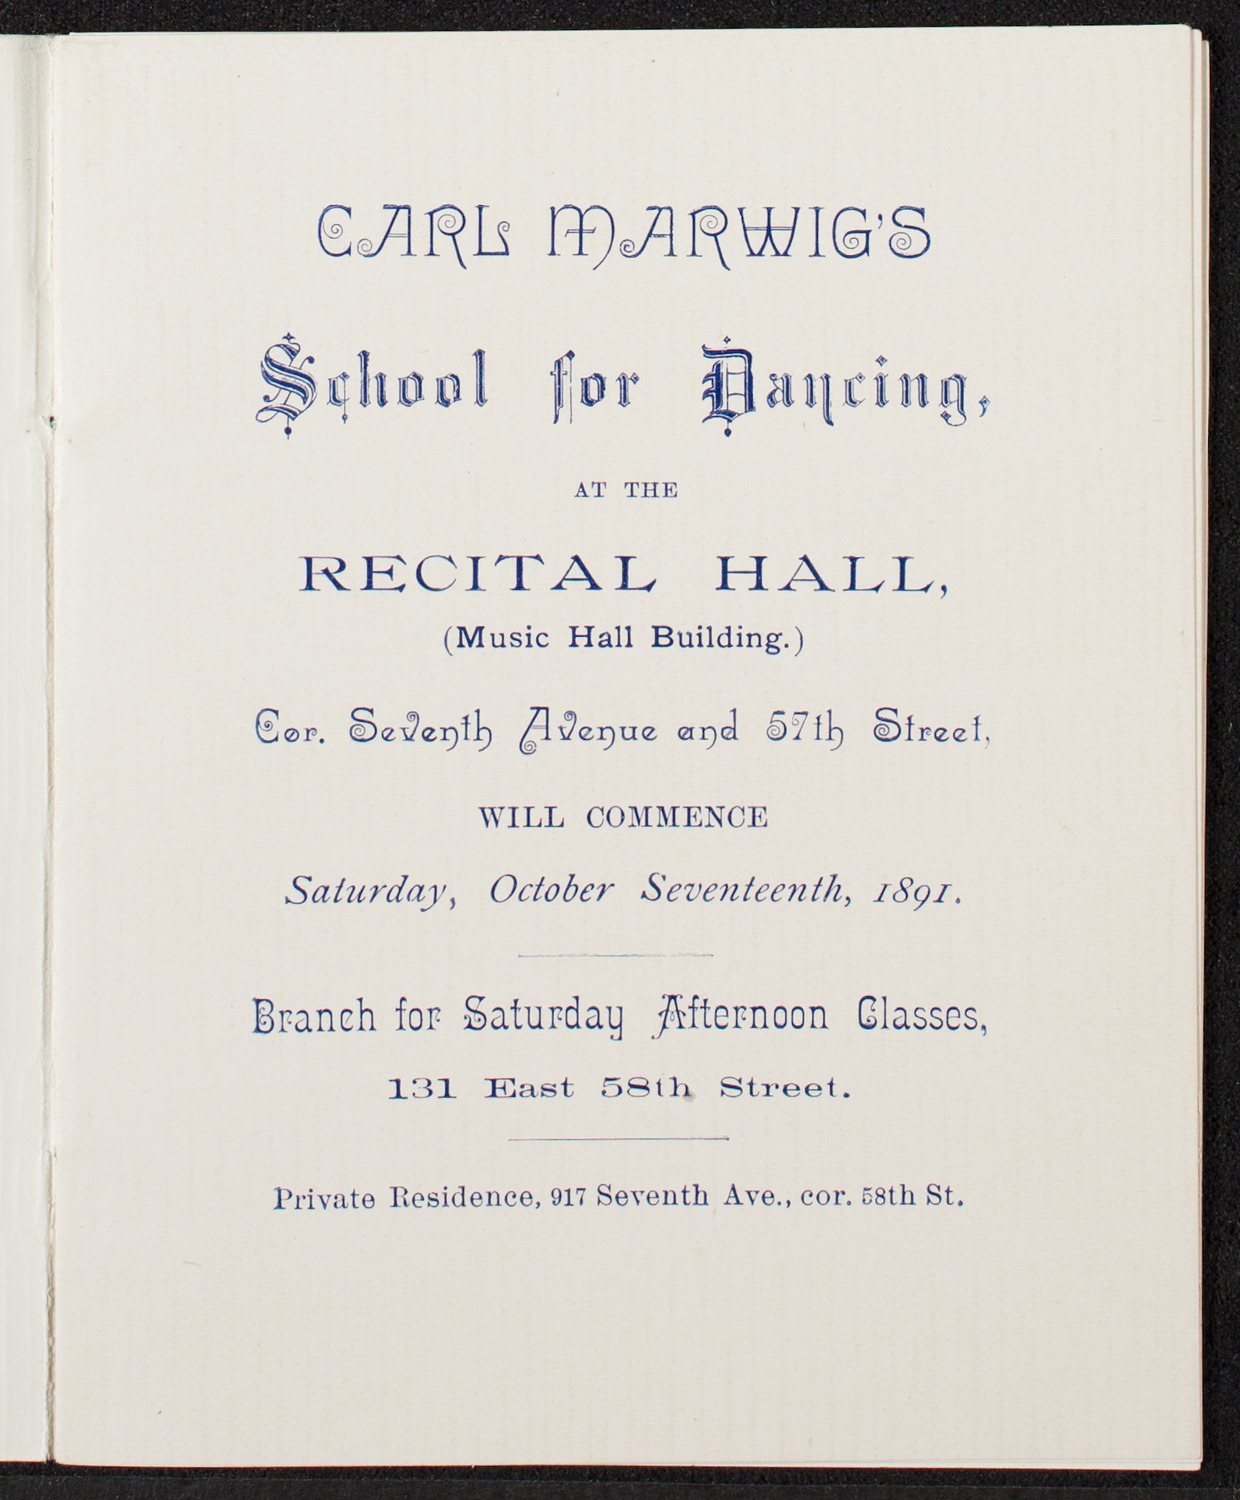 Students of Carl Marwig, October 17, 1891, program page 2